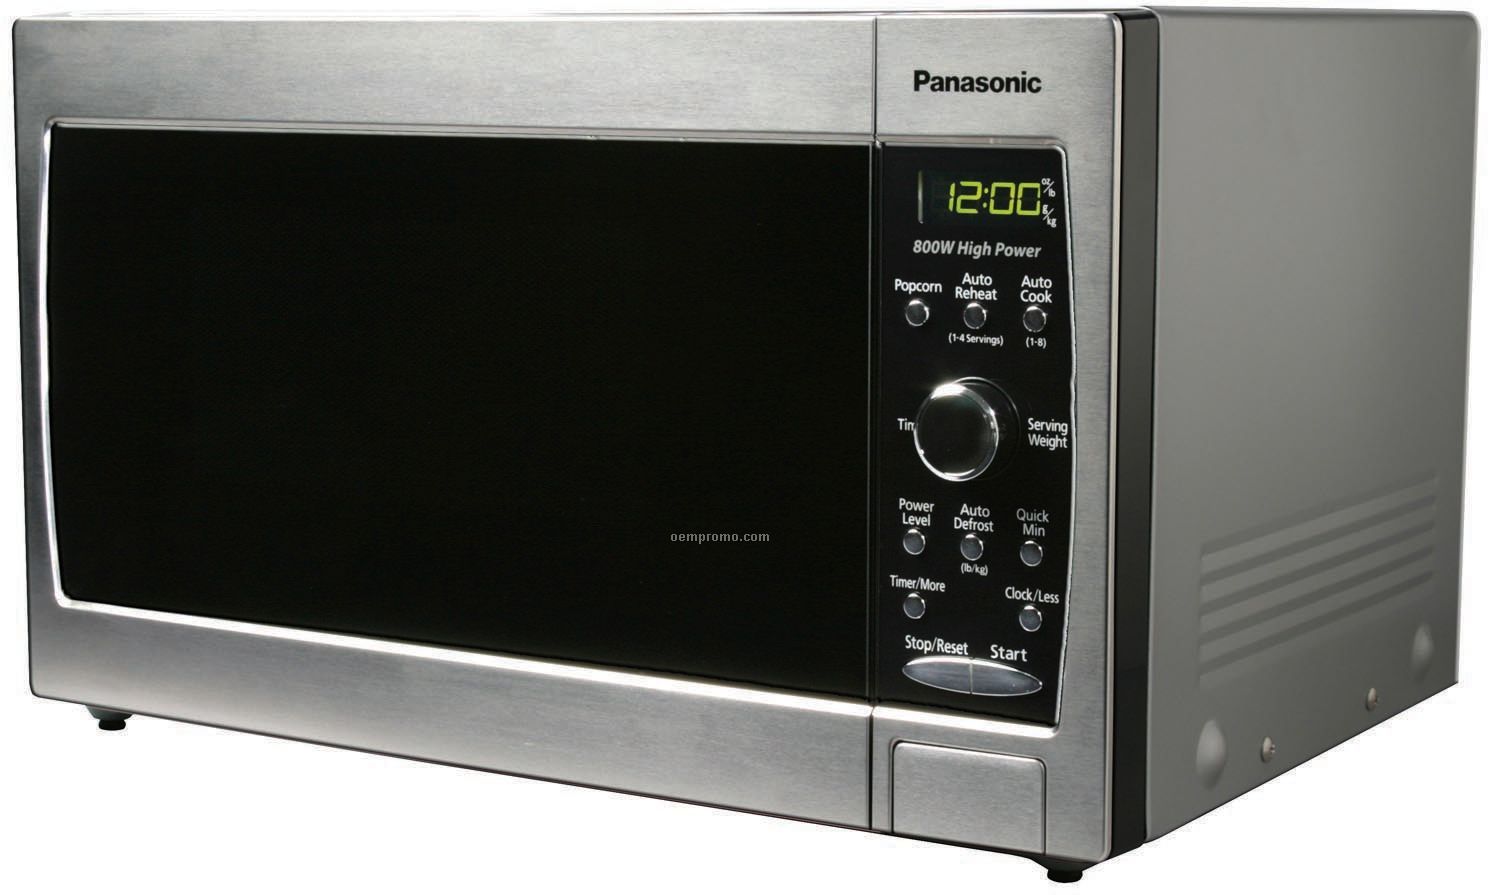 Panasonic Compact-size 0.8 Cubic Feet Microwave (800w)